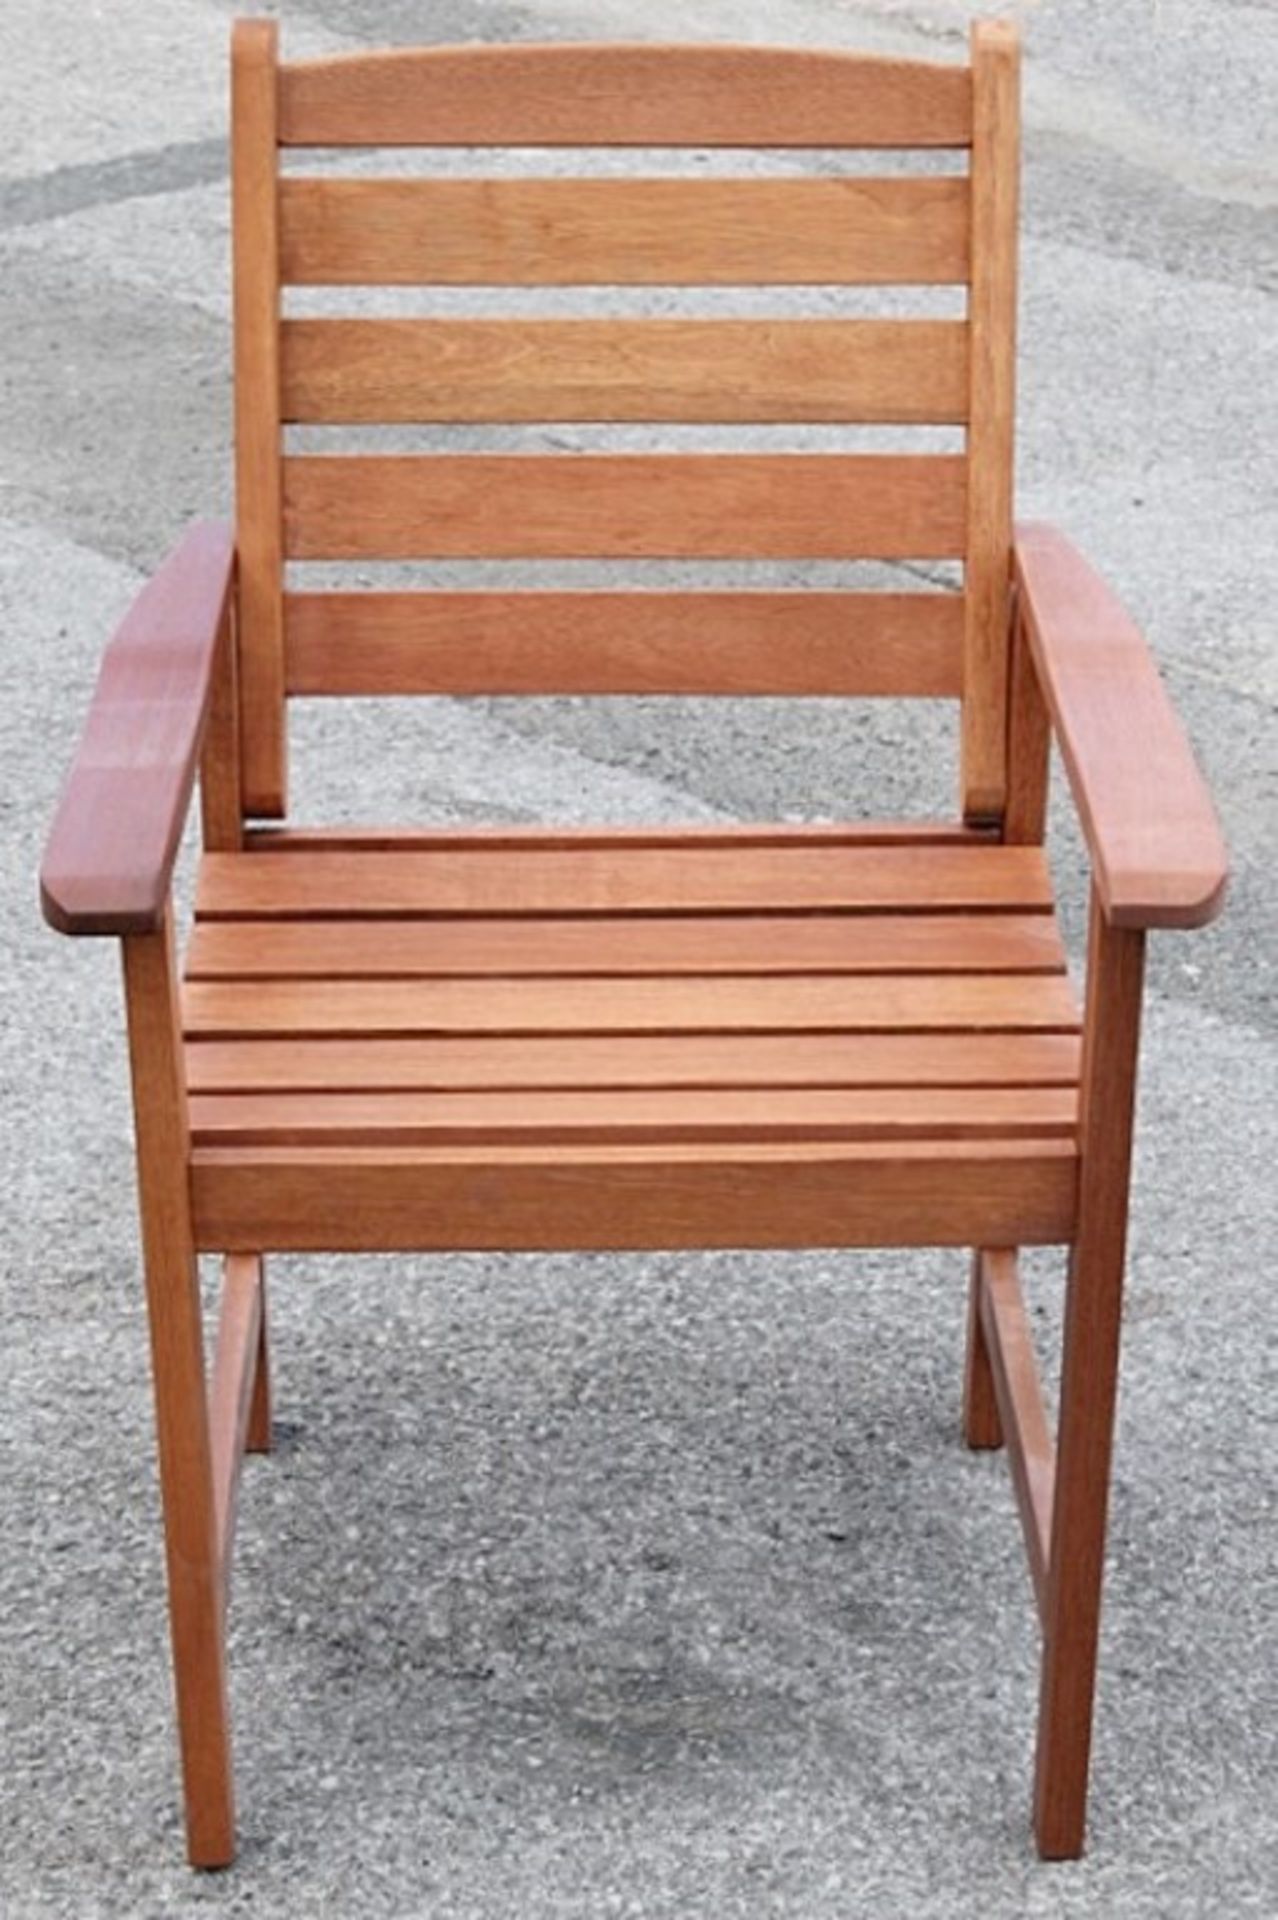 1 x 5-Piece "Macau Nassau" Garden Furniture Set - Includes Bench, Extending Table & 3 x Arm Chairs - - Image 4 of 8